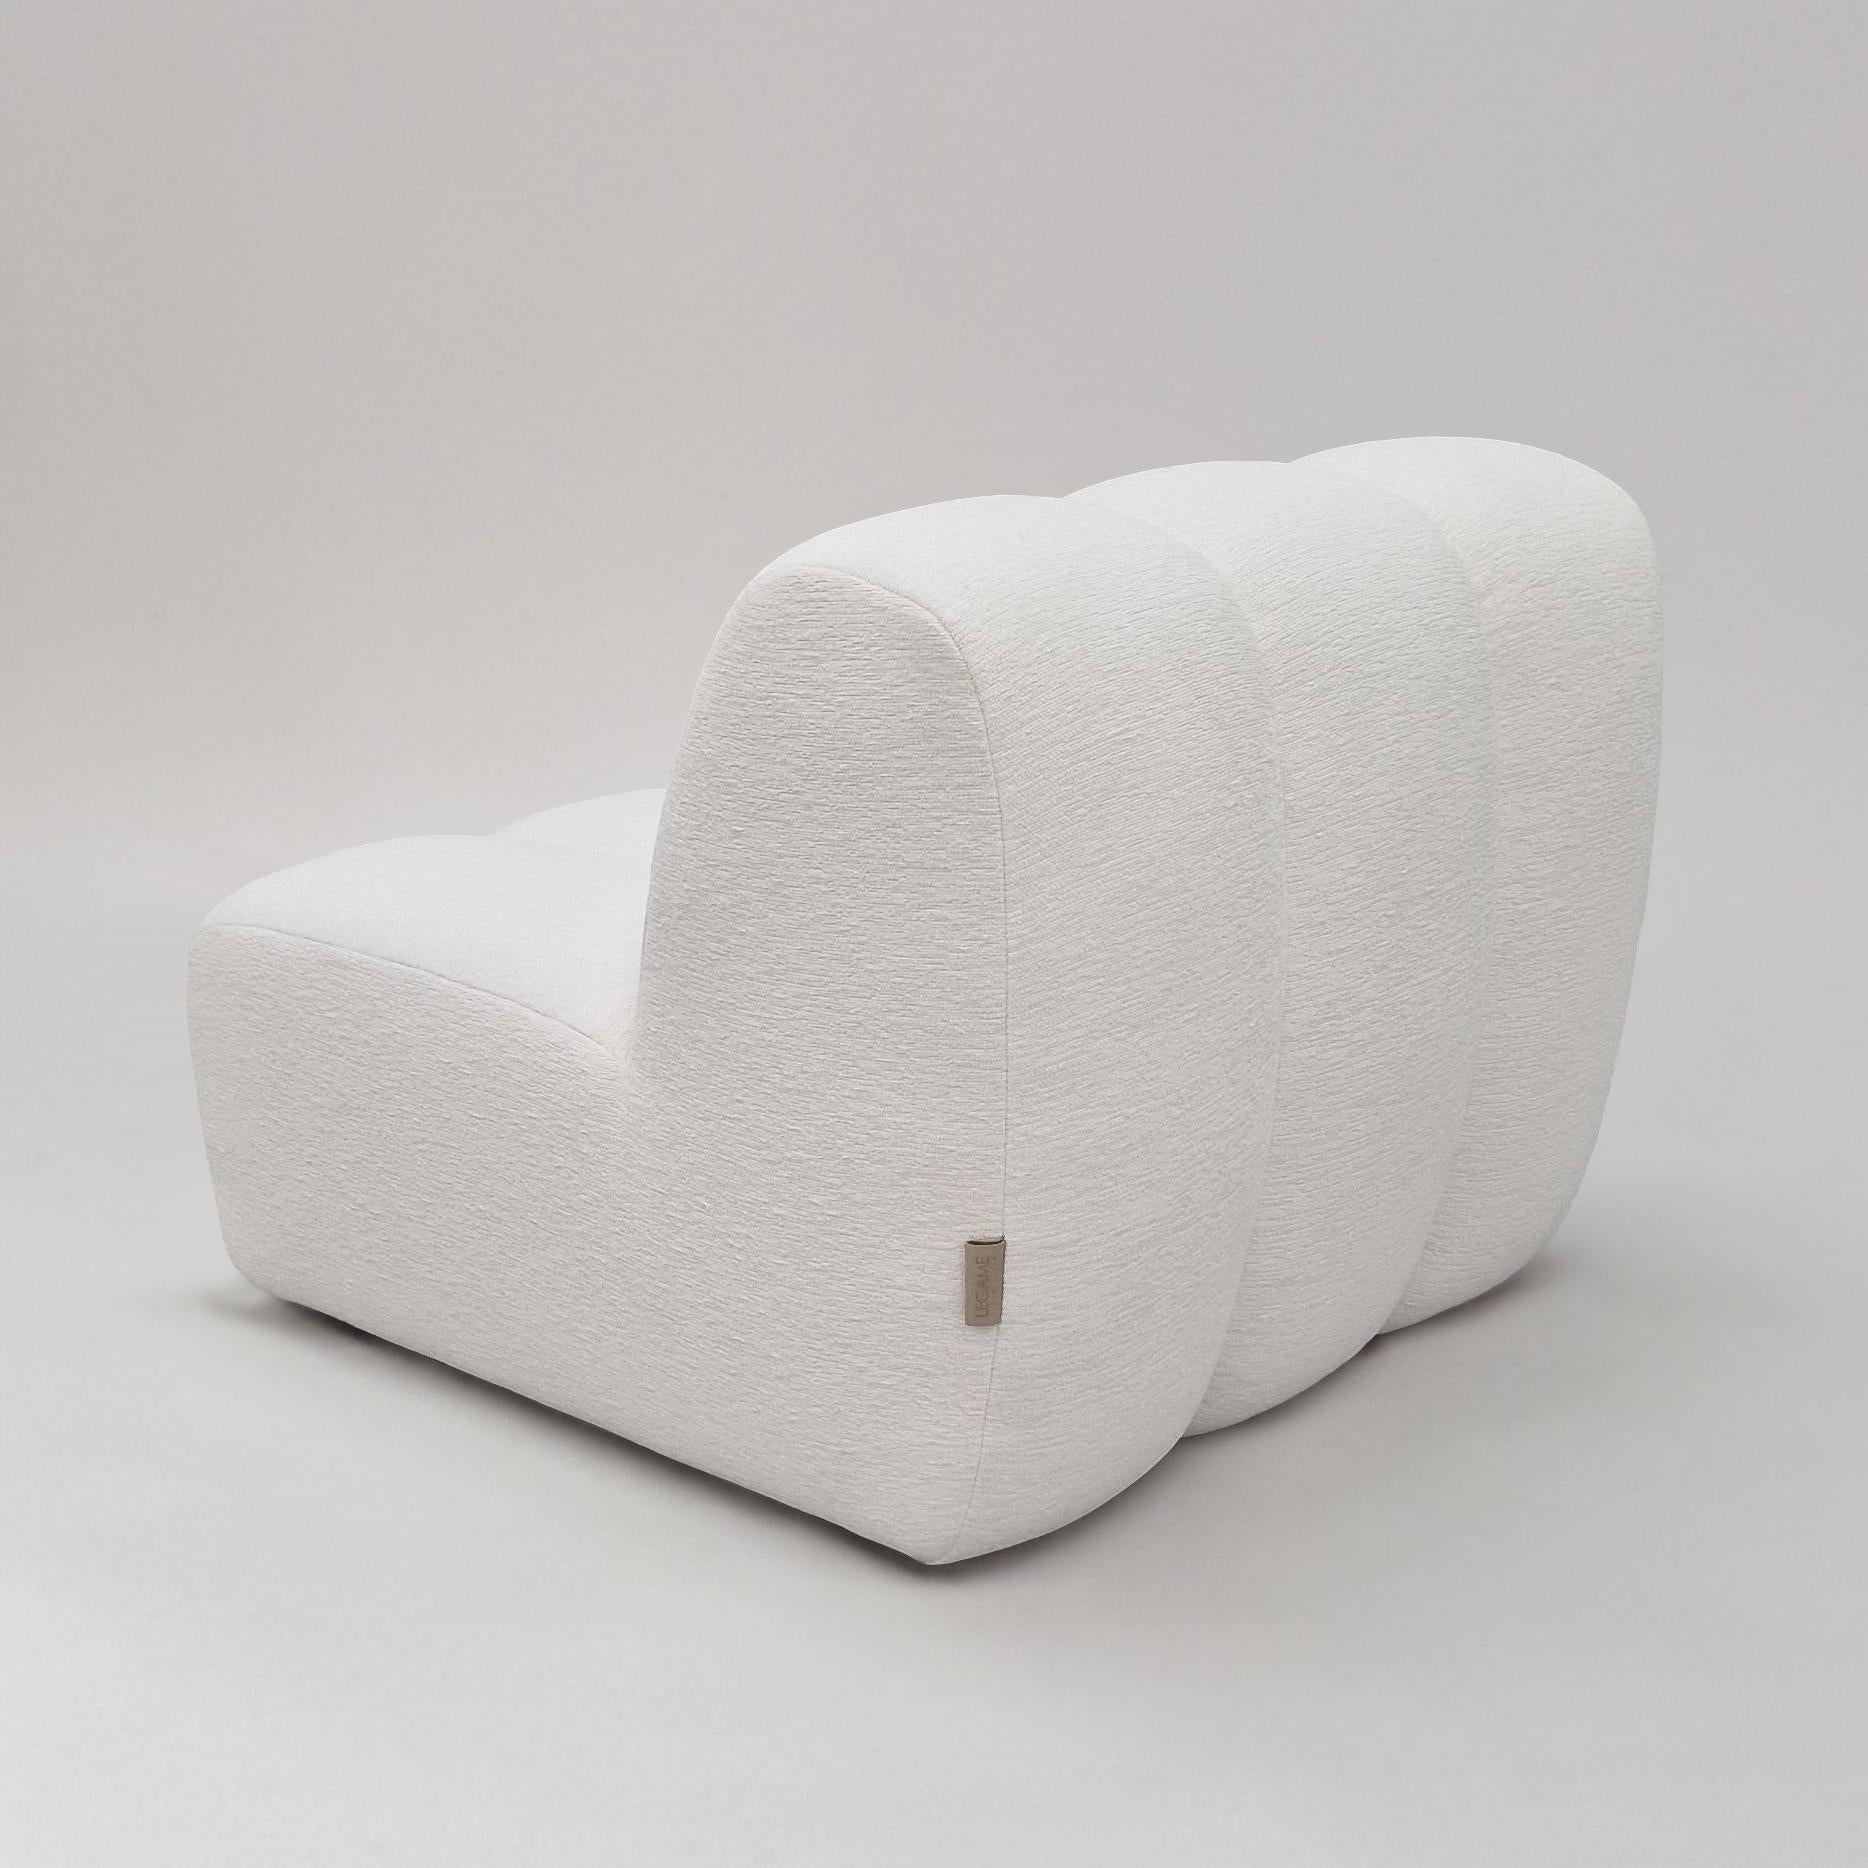 Italian DACCAPO modular sofa by Legame Italia, in white fabric. Basic module. For Sale